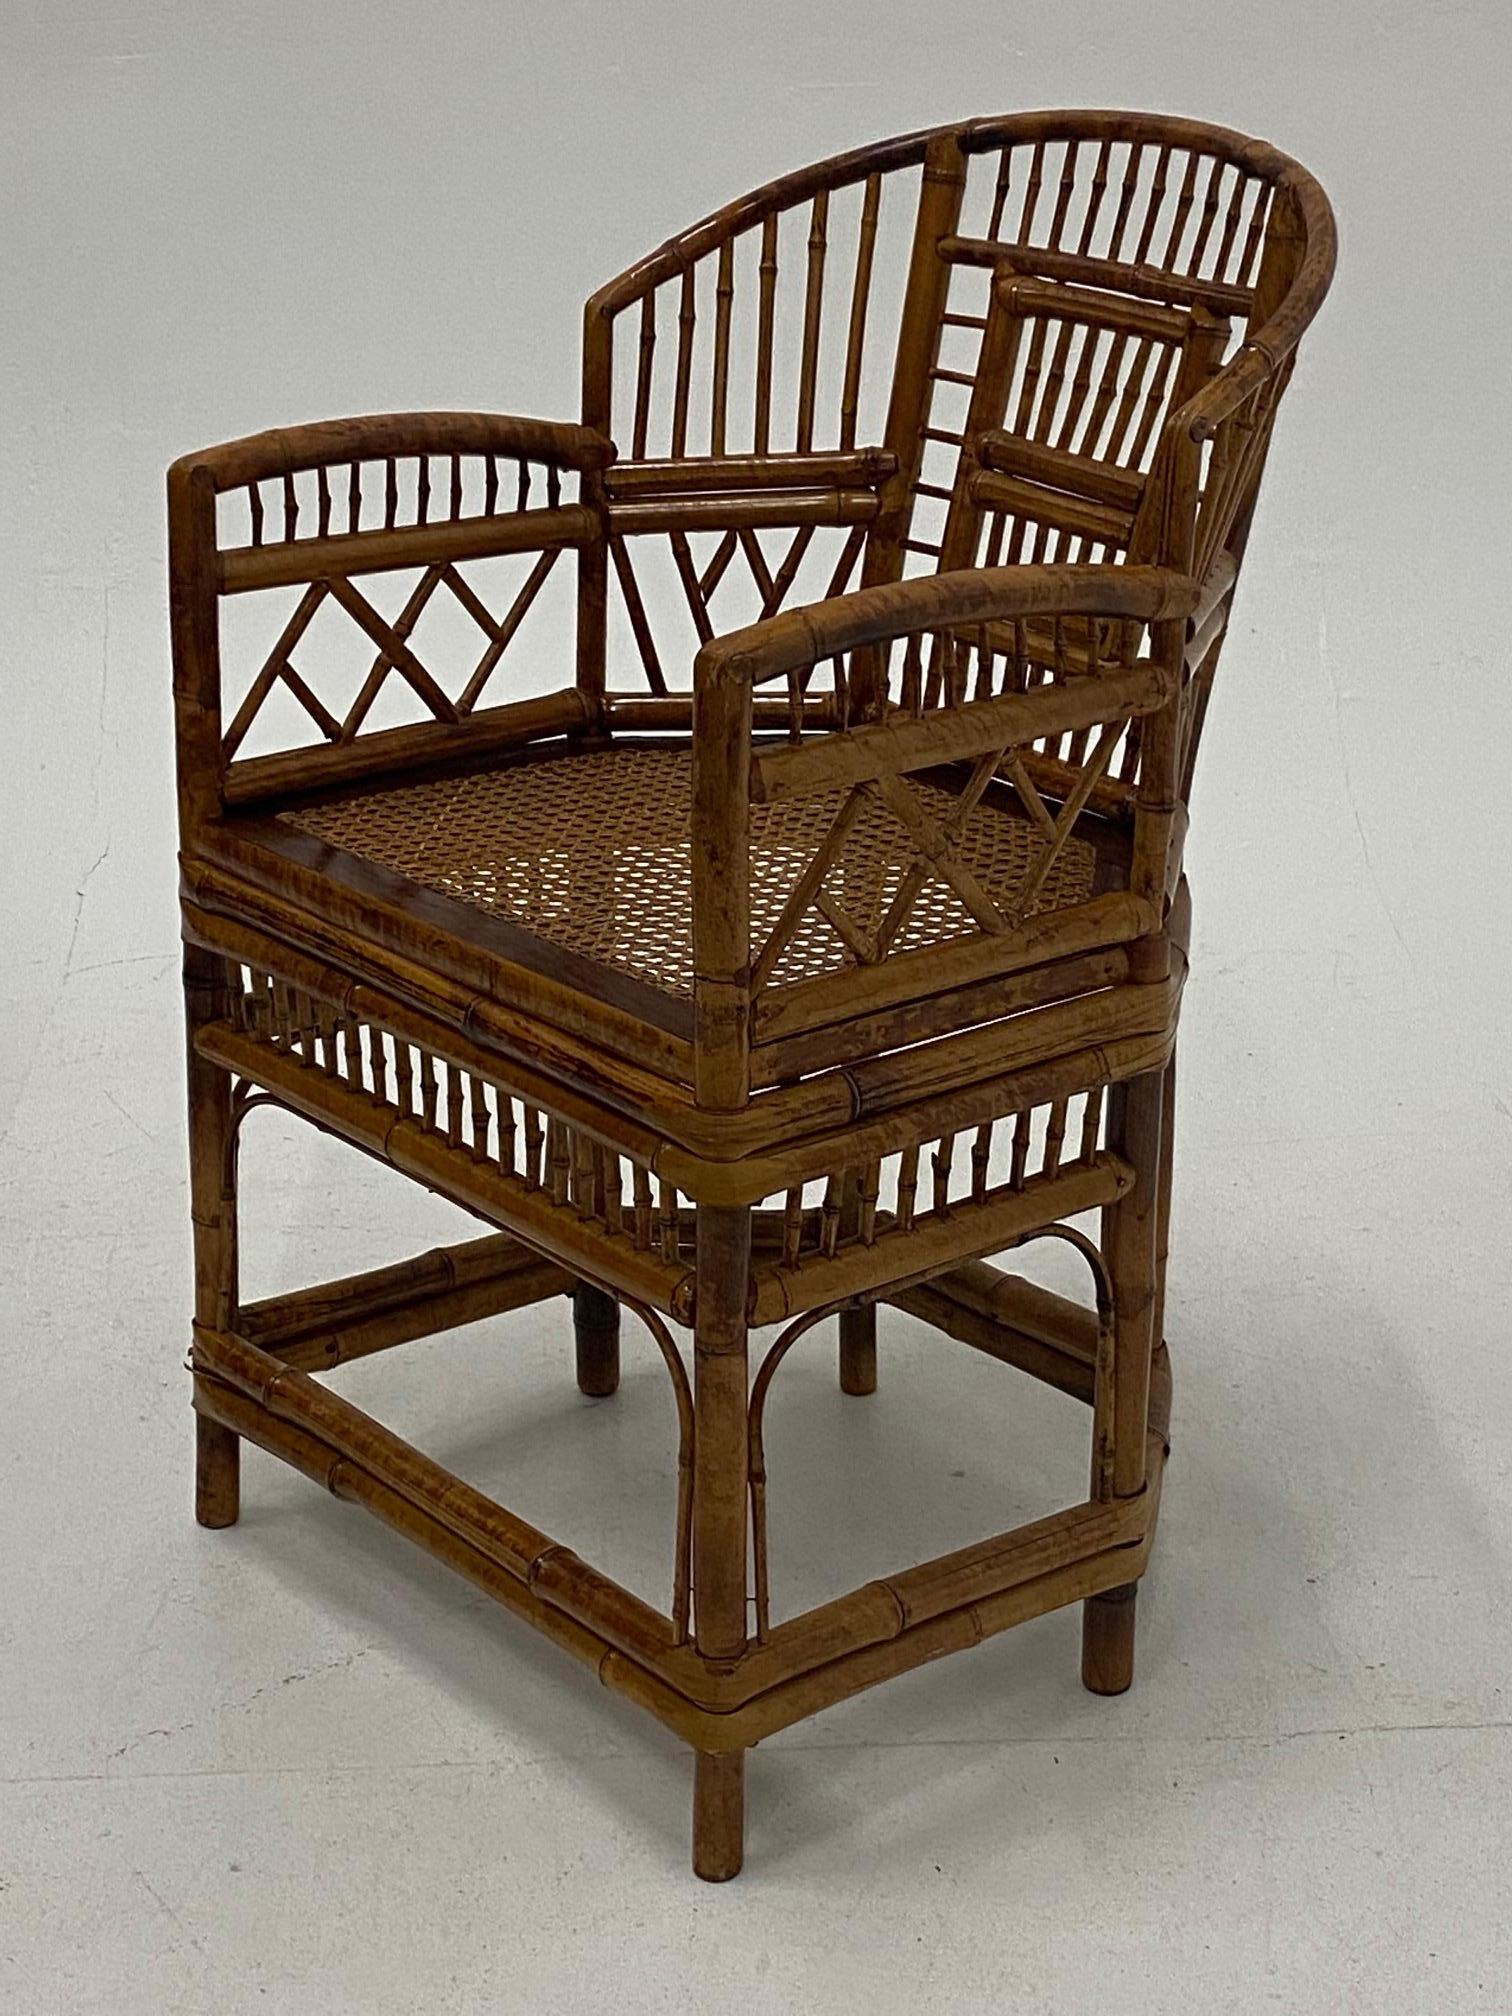 Classic Brighton Pavillion form bamboo armchair having wonderful workmanship and caned seat.